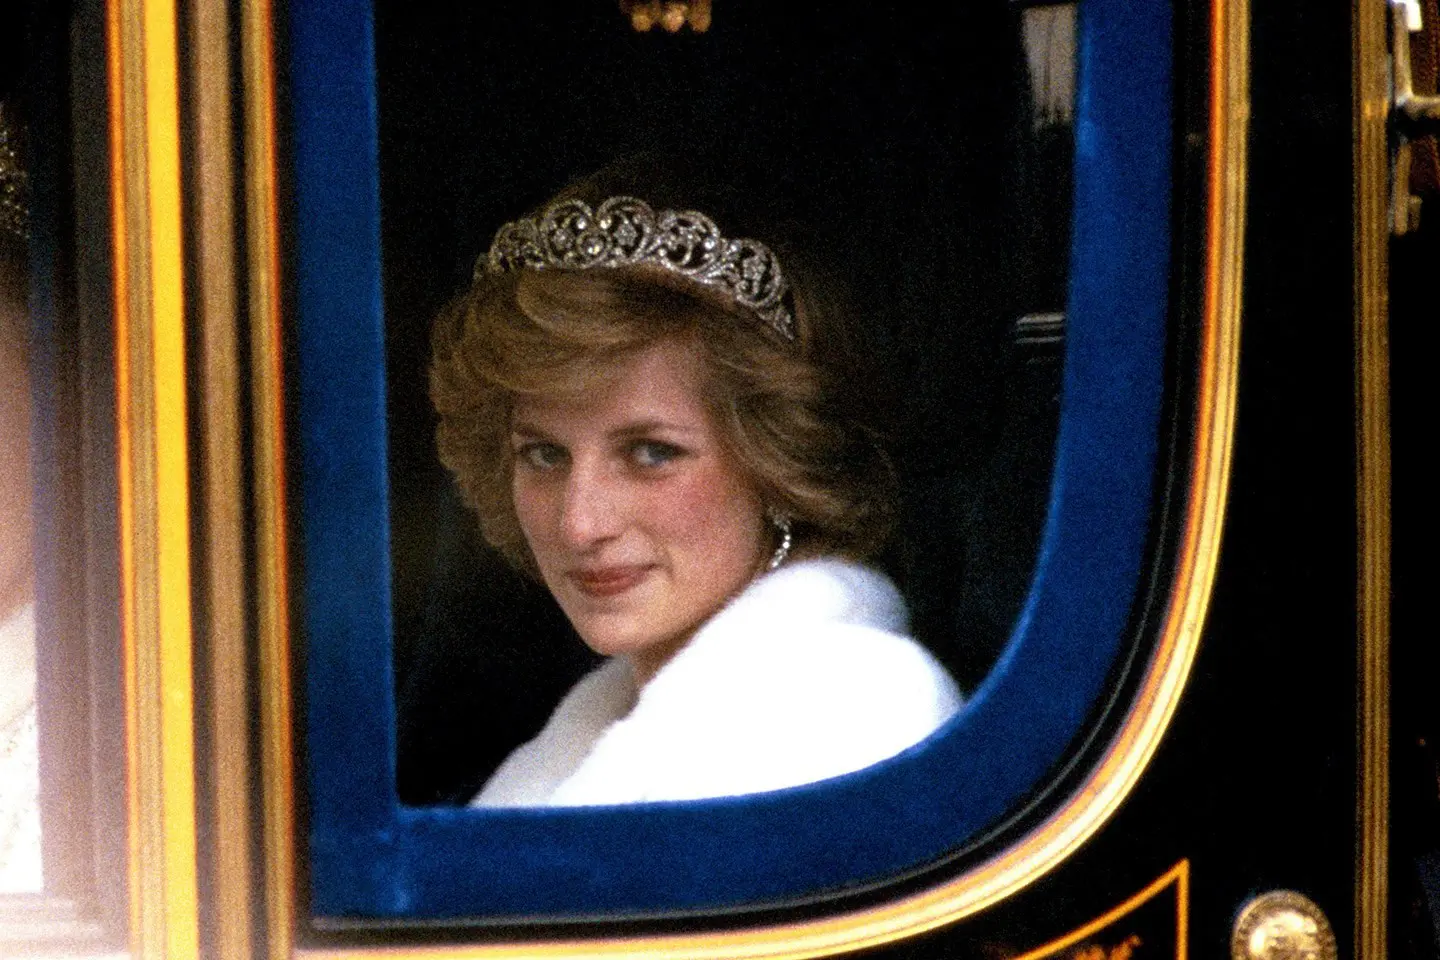 Ibunda Pangeran Harry, Putri Diana, meninggal dalam kecelakaan mobil akibat menghindari kejaran media.